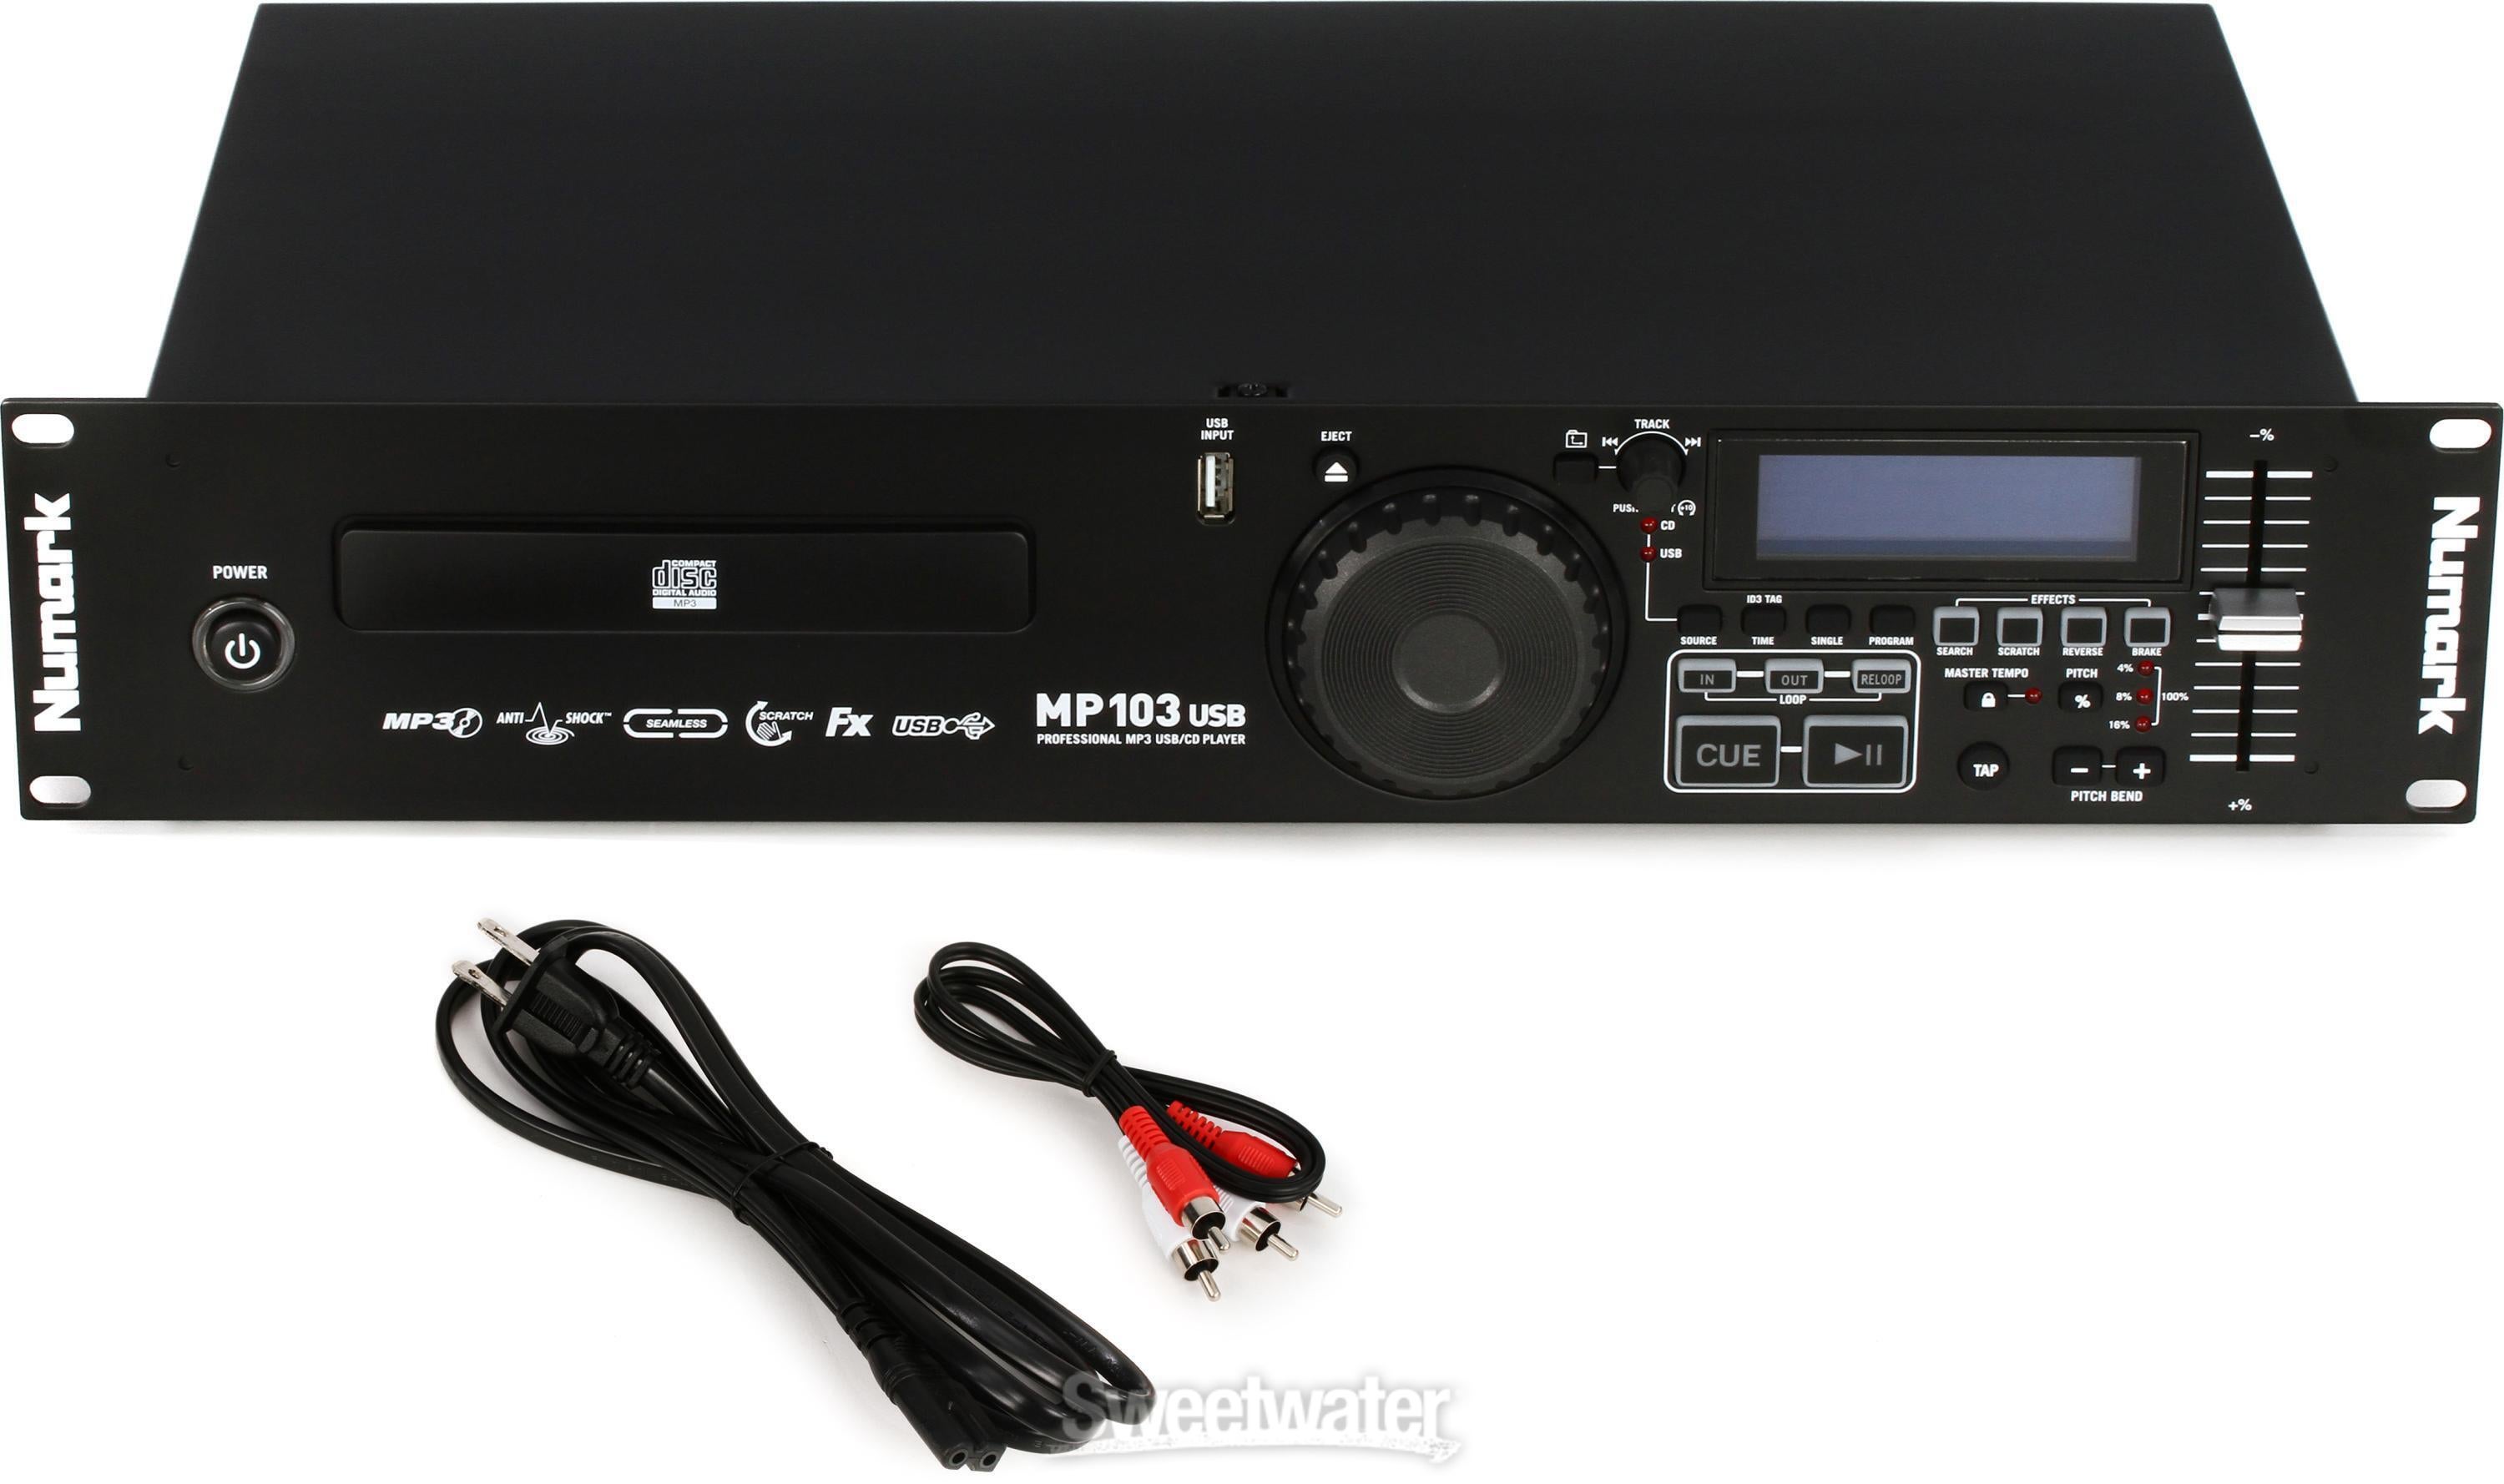 Numark MP103USB Rackmount CD / MP3 / USB Player | Sweetwater